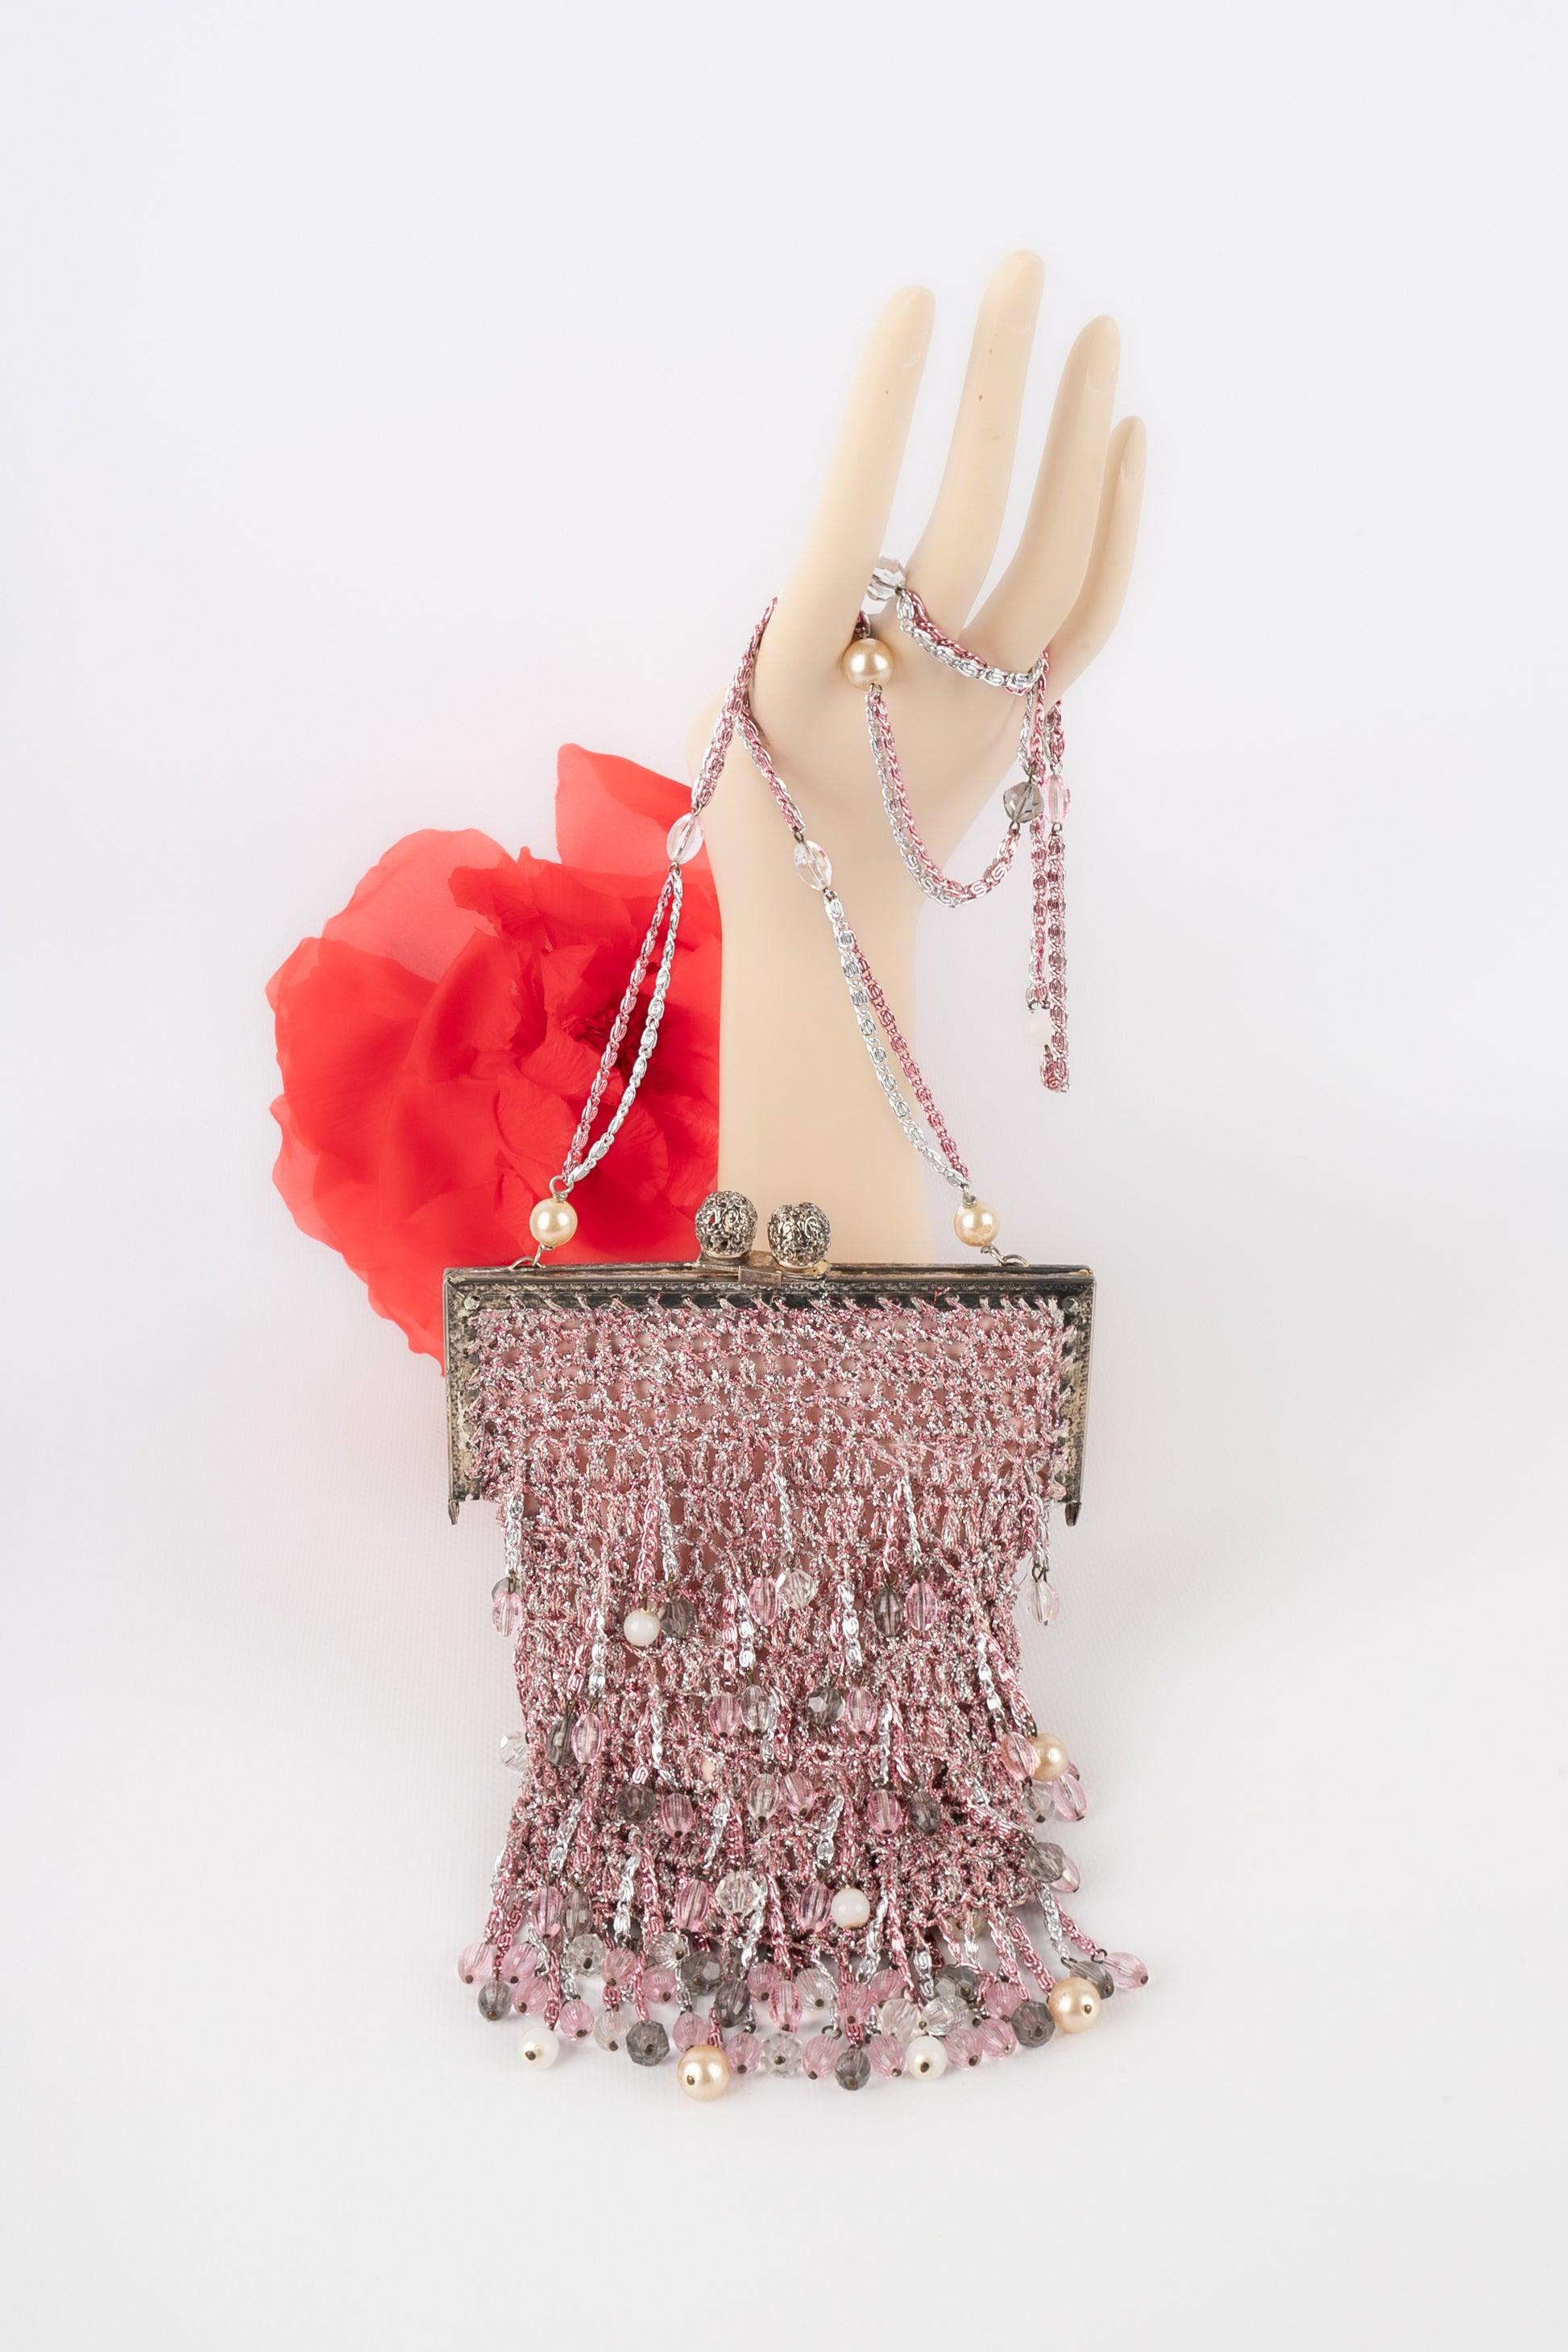 Loris Azzaro Pink and Silvery Lurew Mesh Handbag For Sale 3